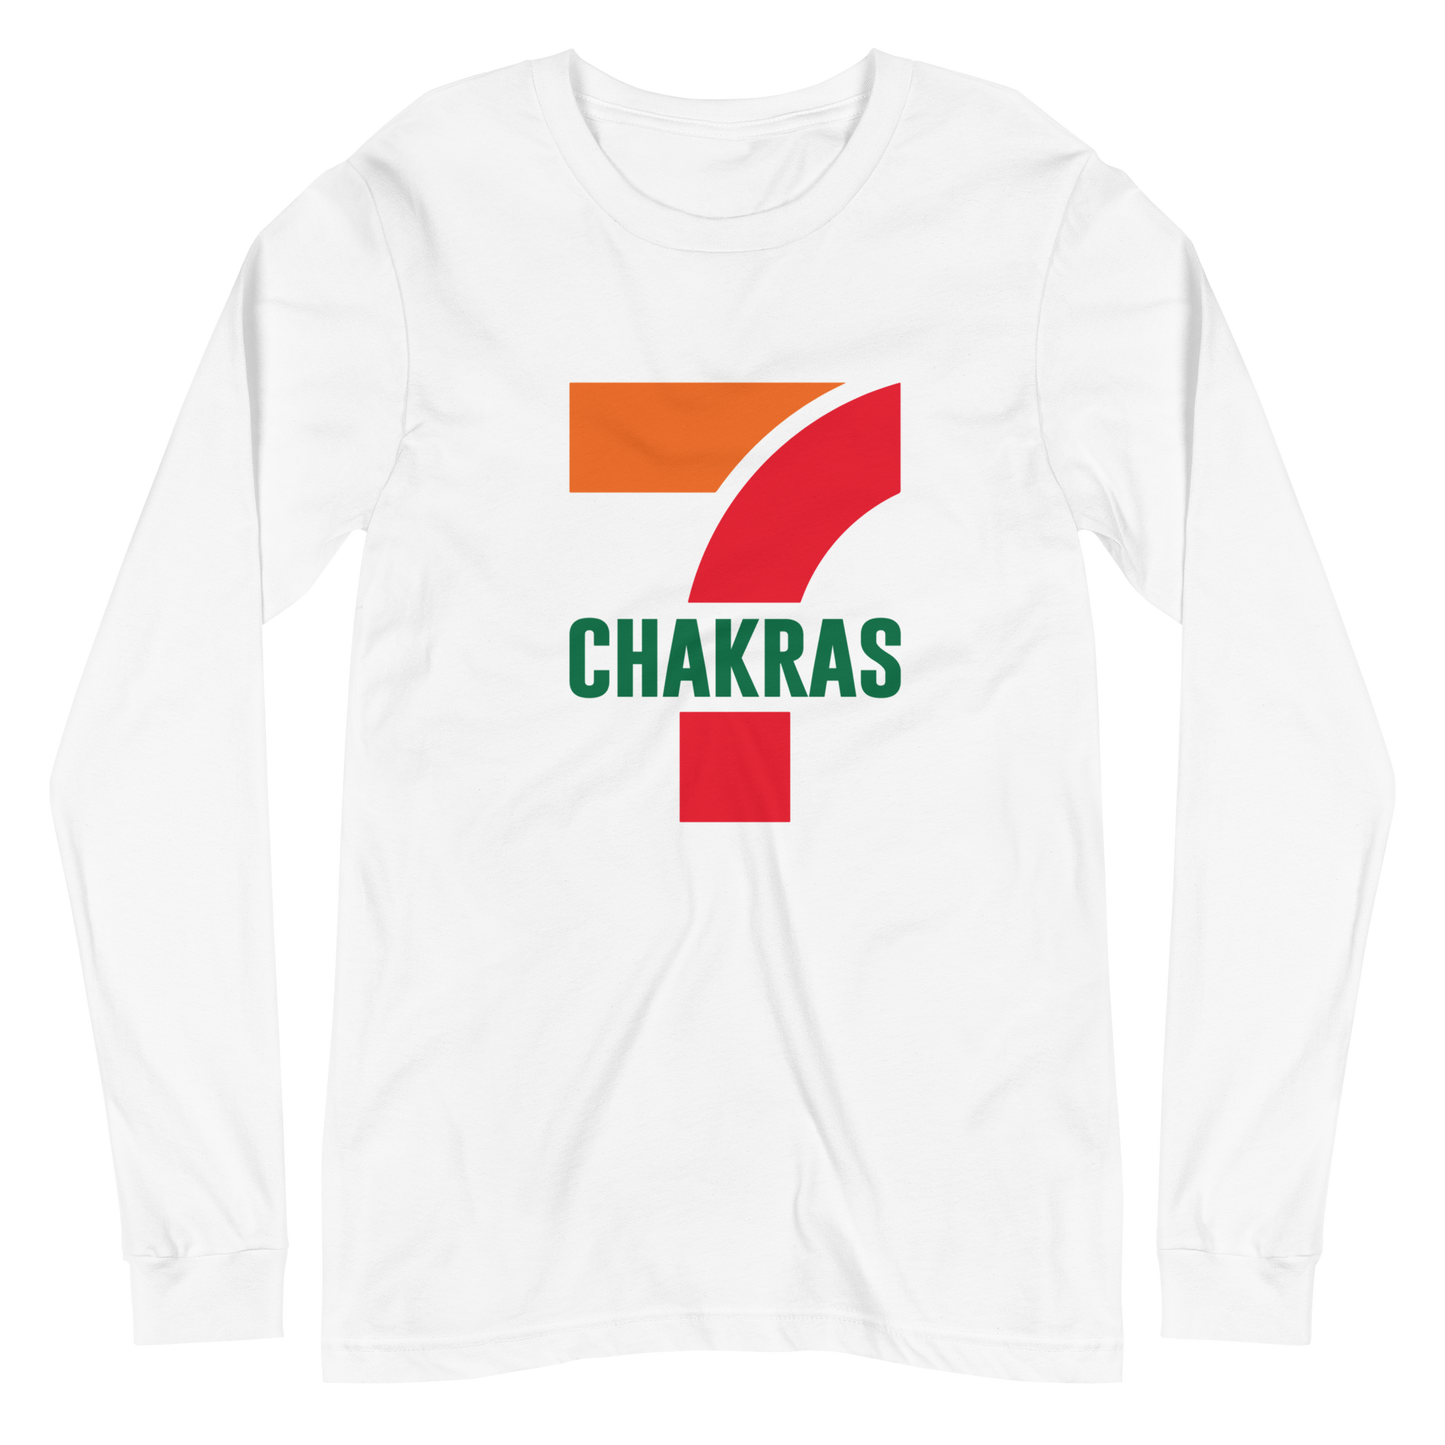 7 Chakras Graphic Long Sleeve Tee